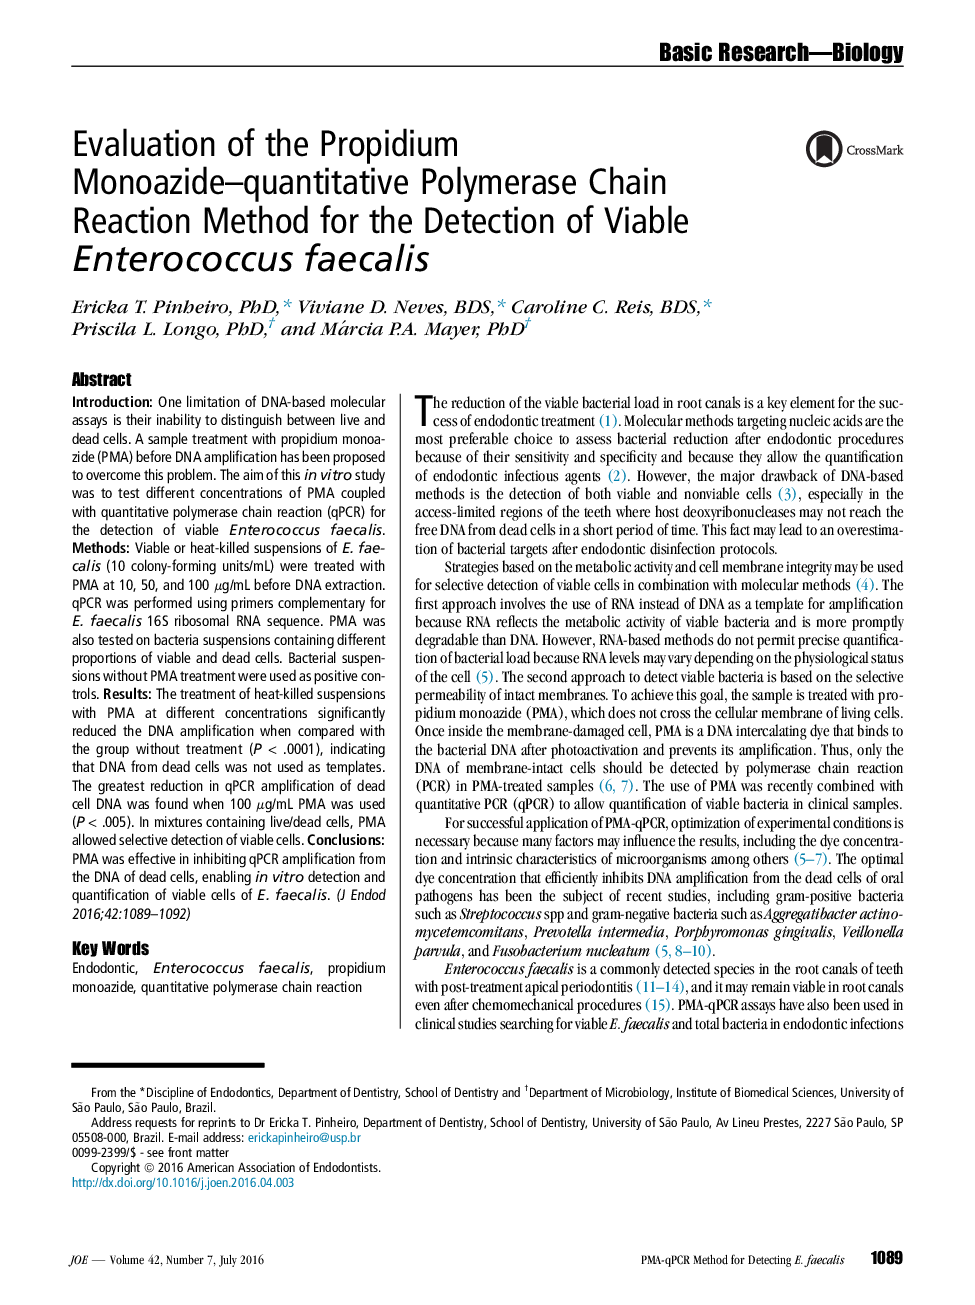 Evaluation of the Propidium Monoazide–quantitative Polymerase Chain Reaction Method for the Detection of Viable Enterococcus faecalis